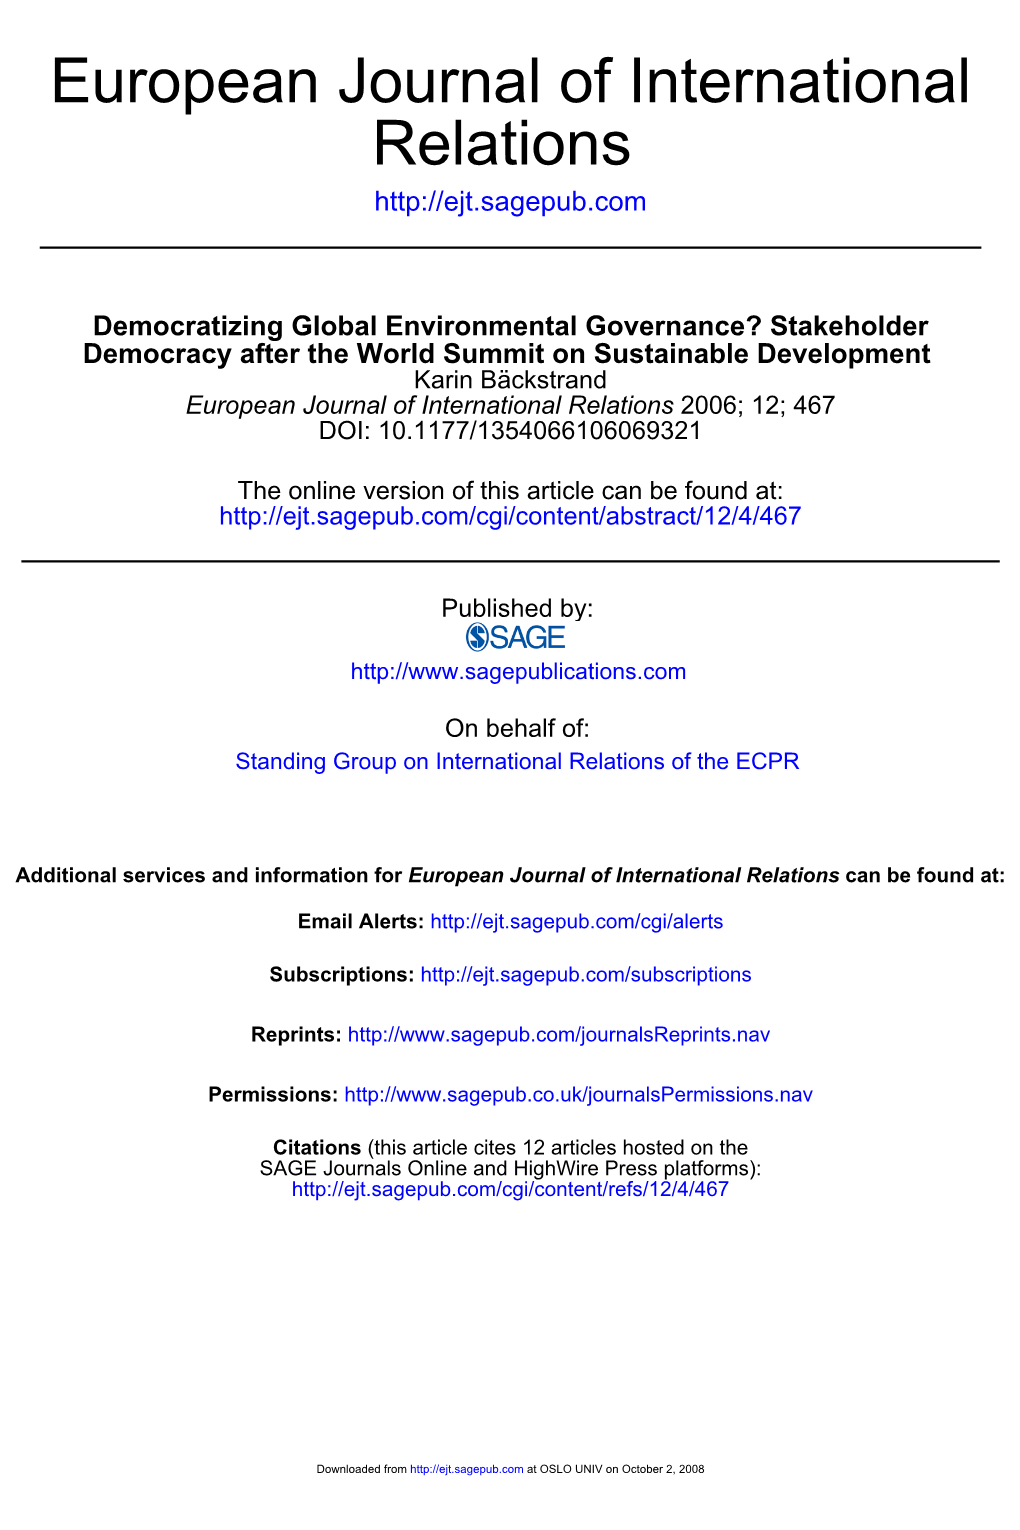 Democratizing Global Environmental Governance?